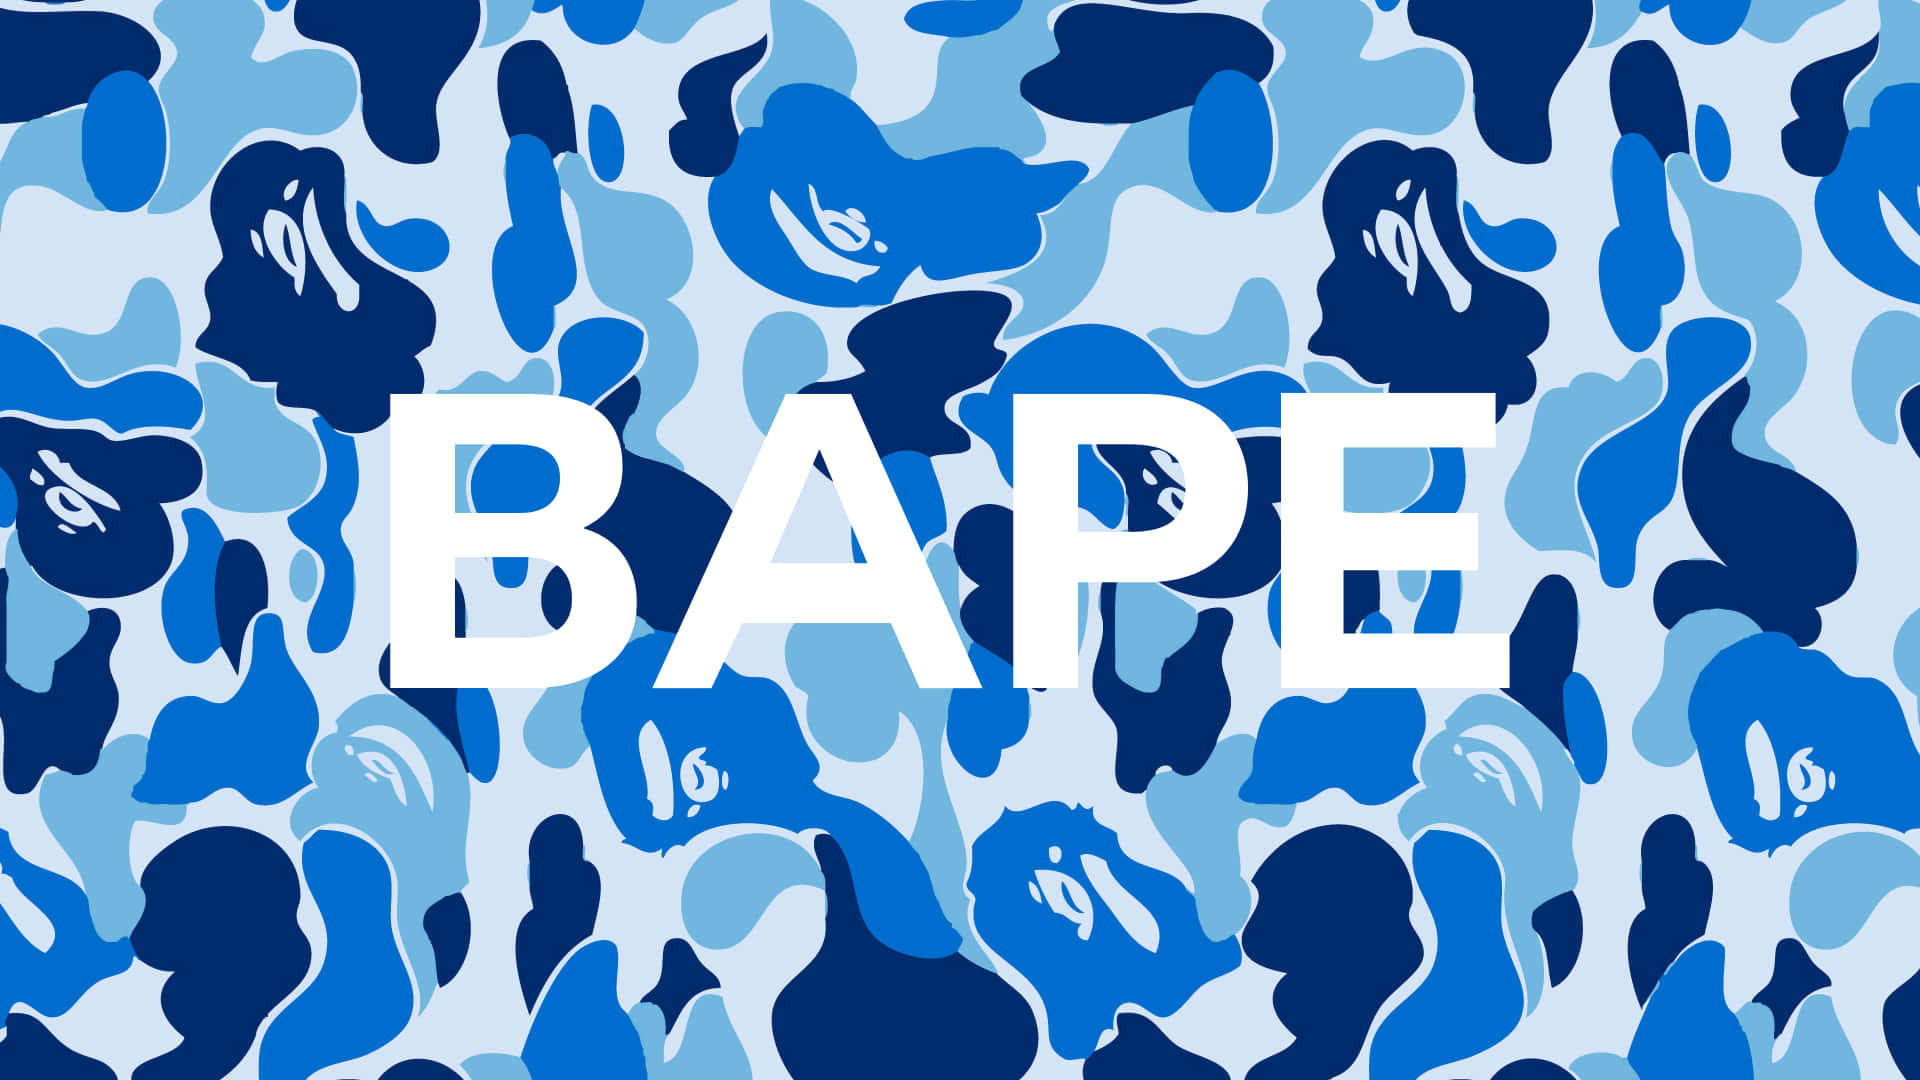 Bape Supreme Wallpaper Discover more Background, Blue, camo